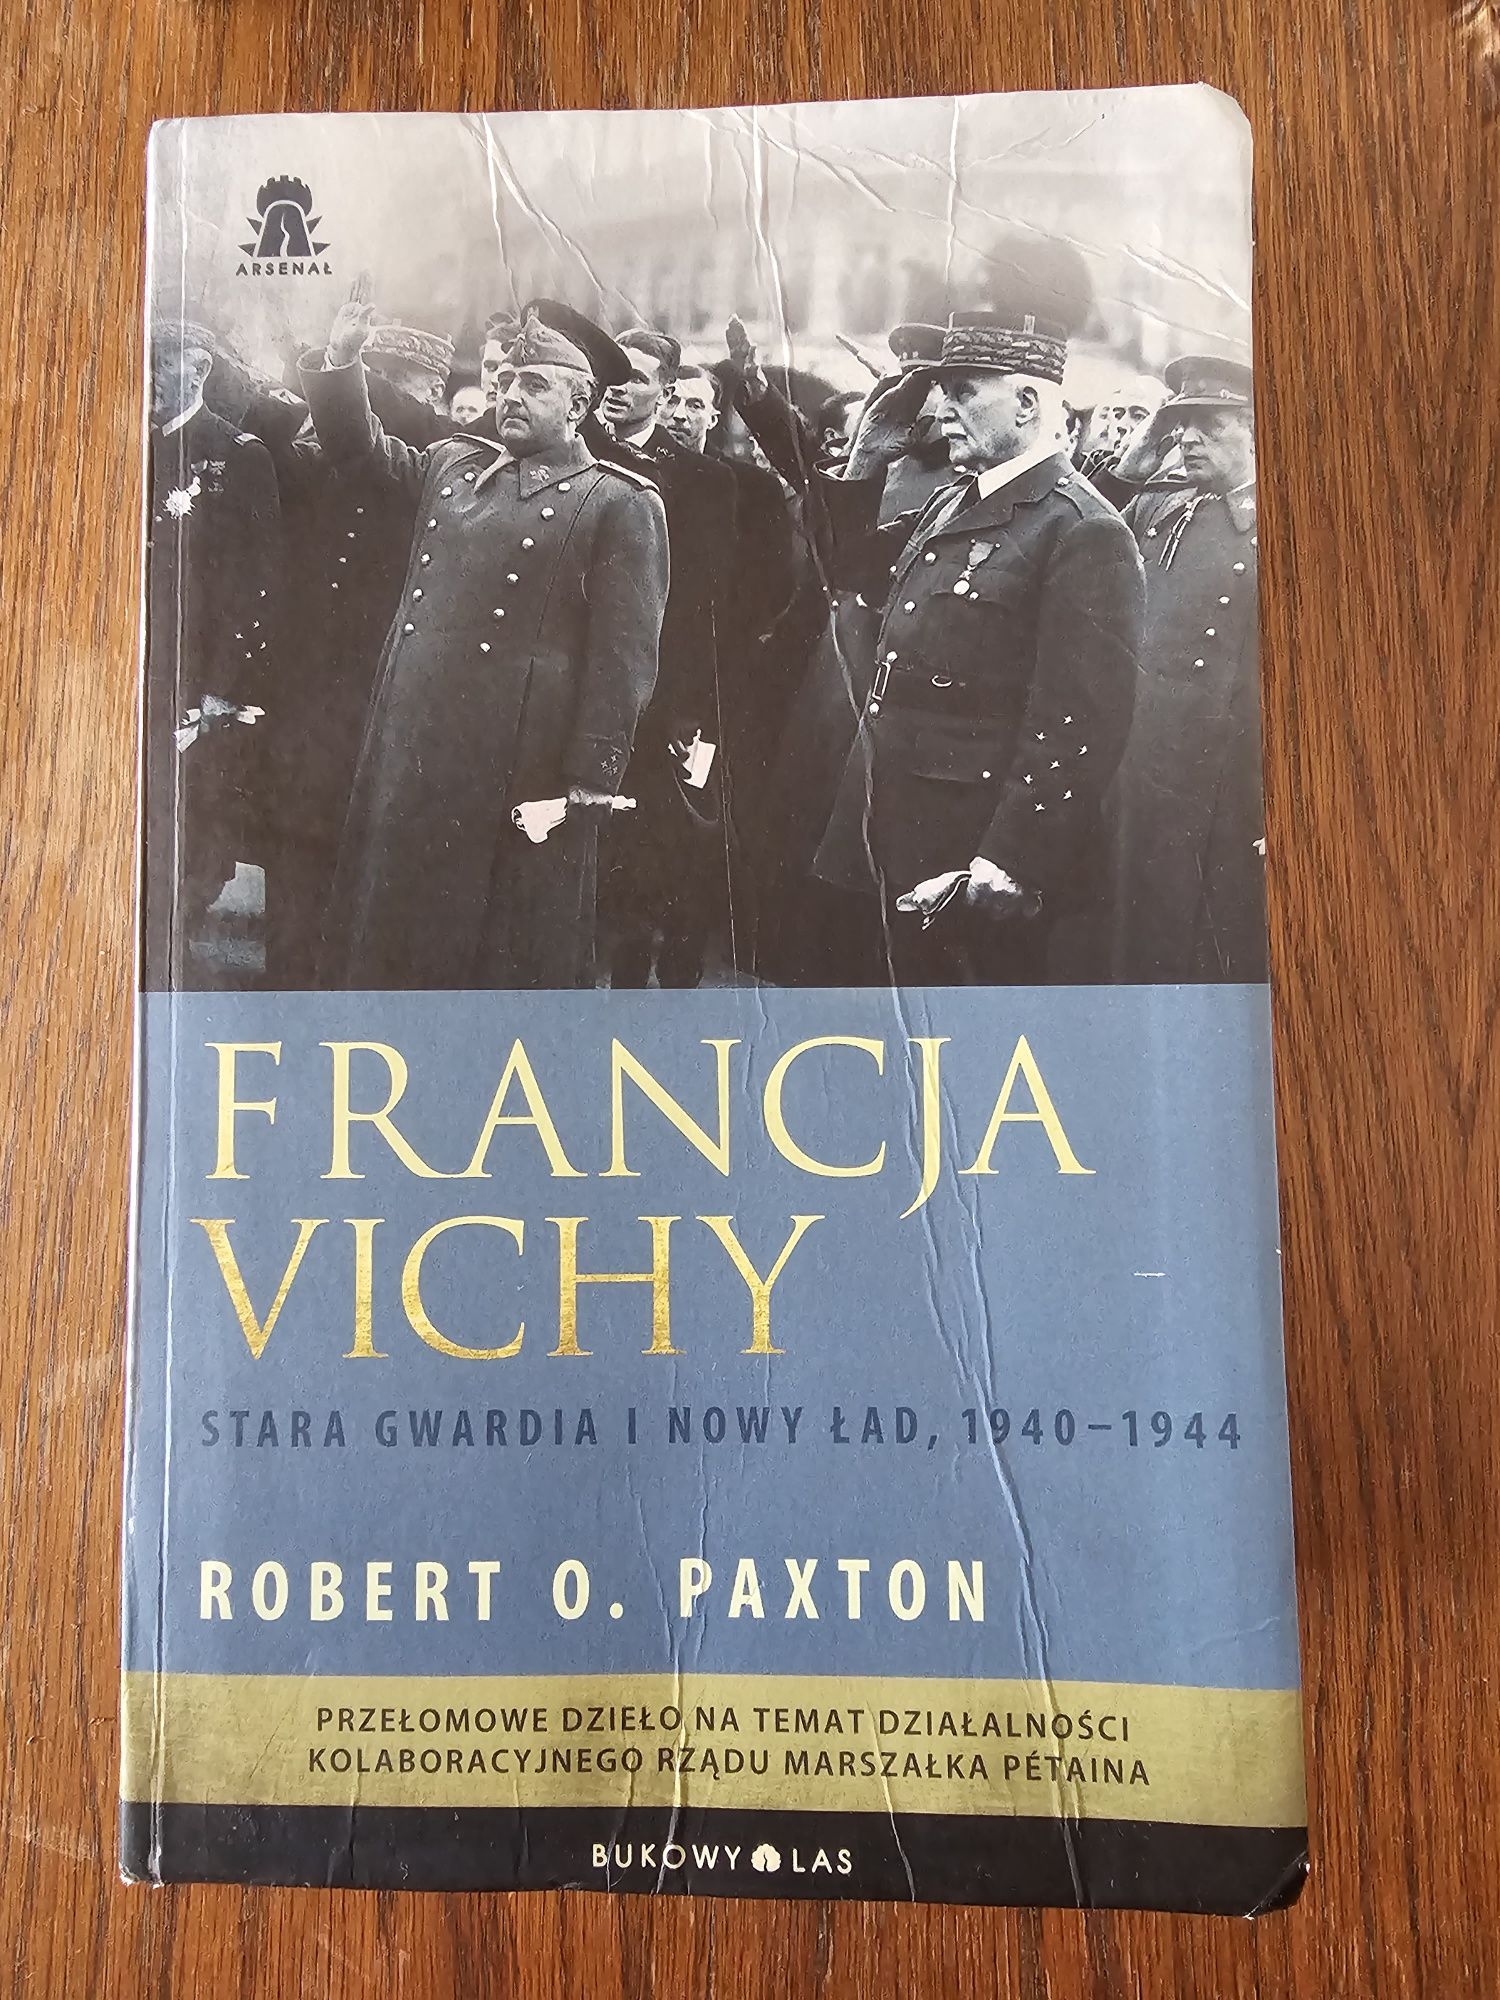 Książka Robert O.Paxton "Francja Vichy"